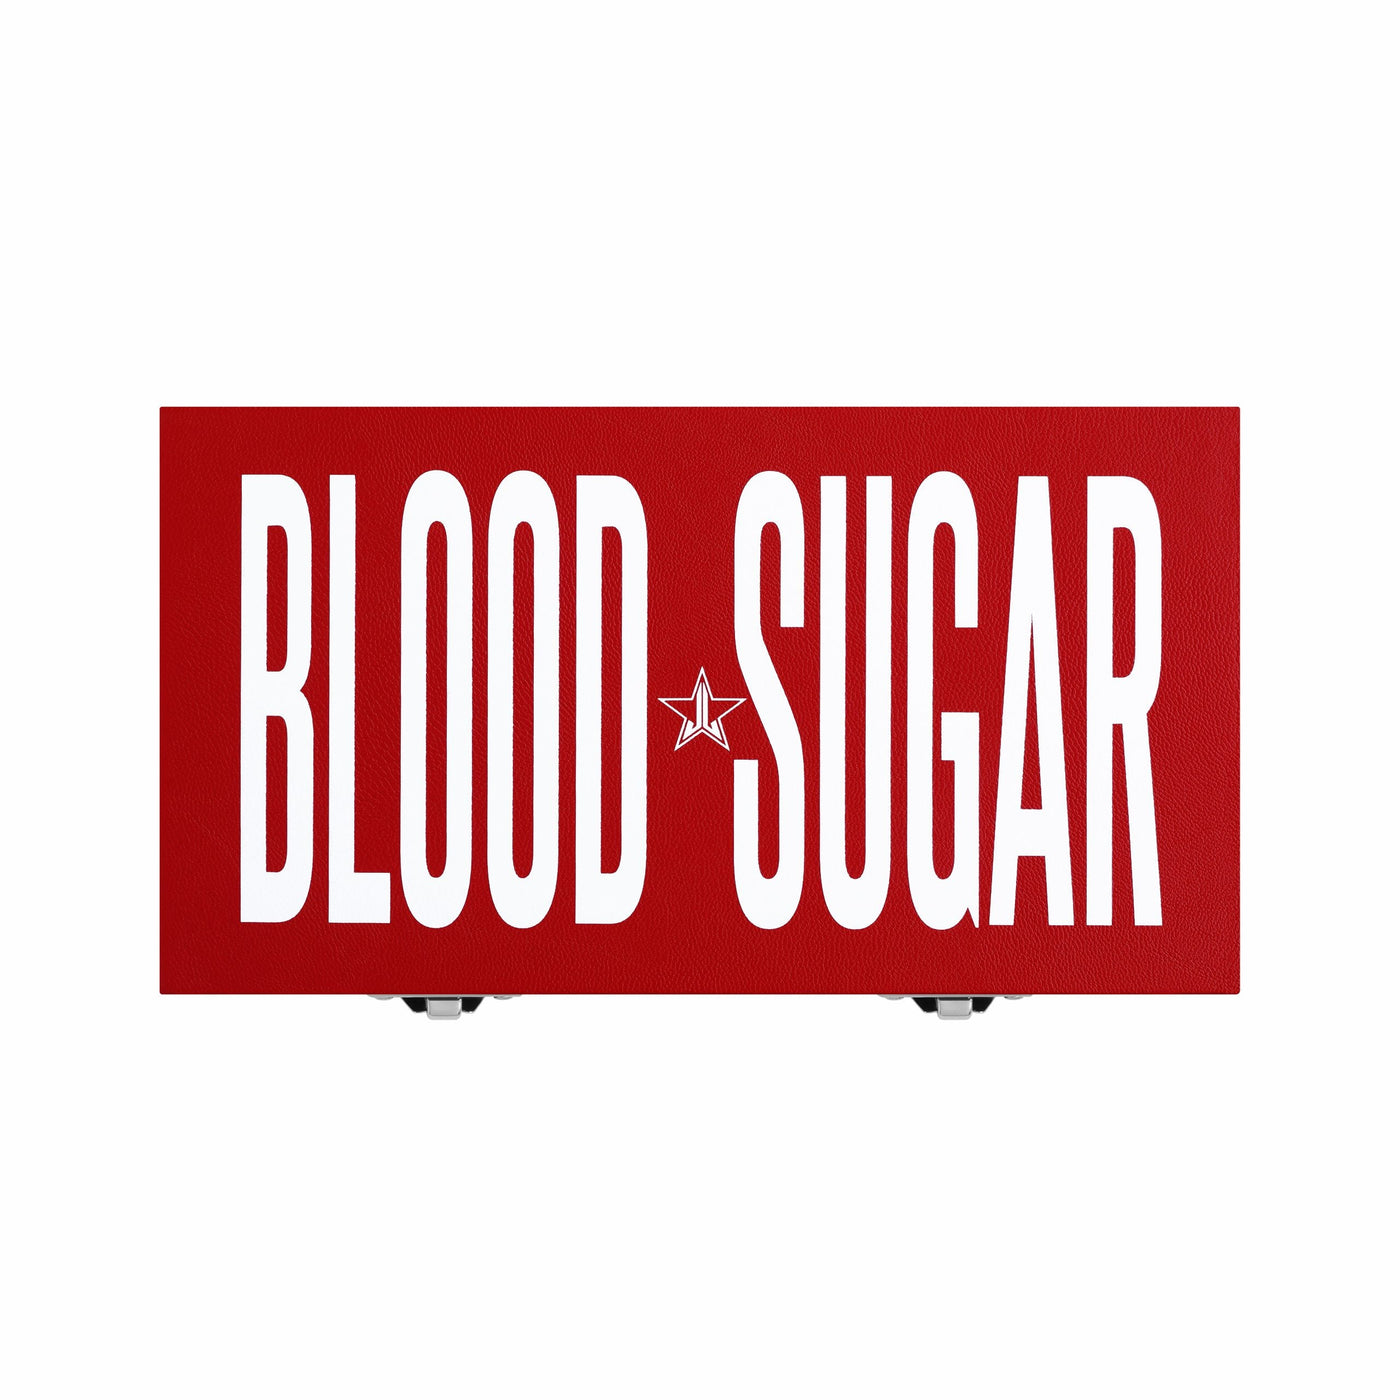 Jeffree Star Cosmetics - Blood Sugar Palette